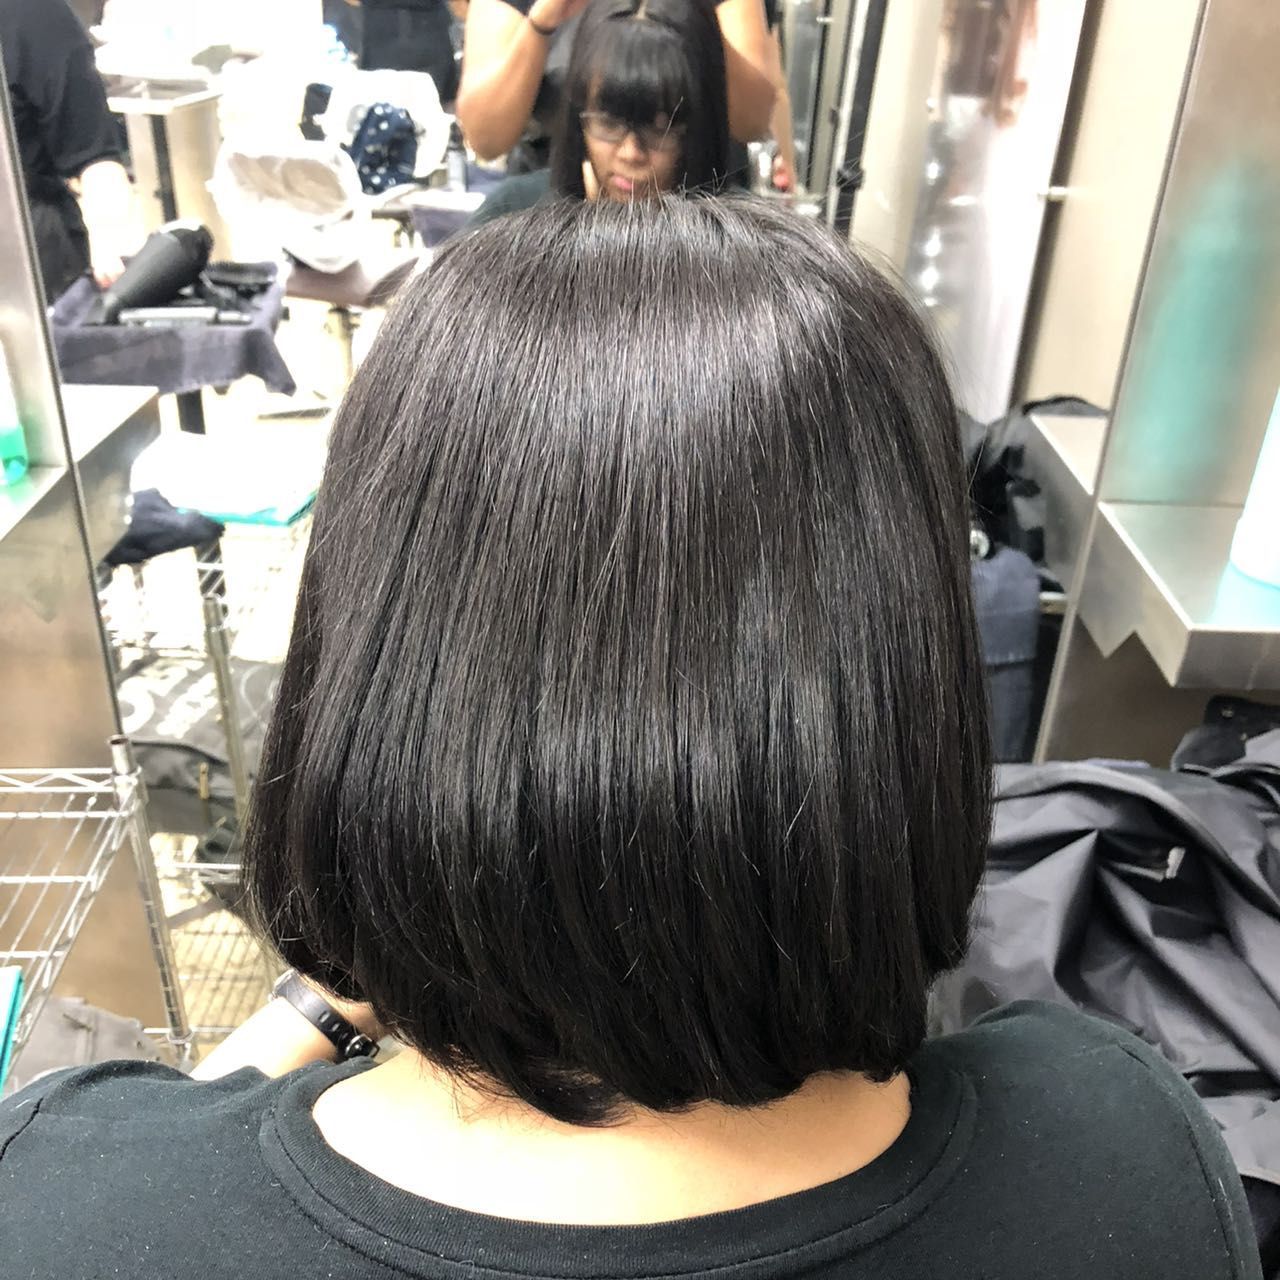 Hair cut / Recorte de cabello portfolio